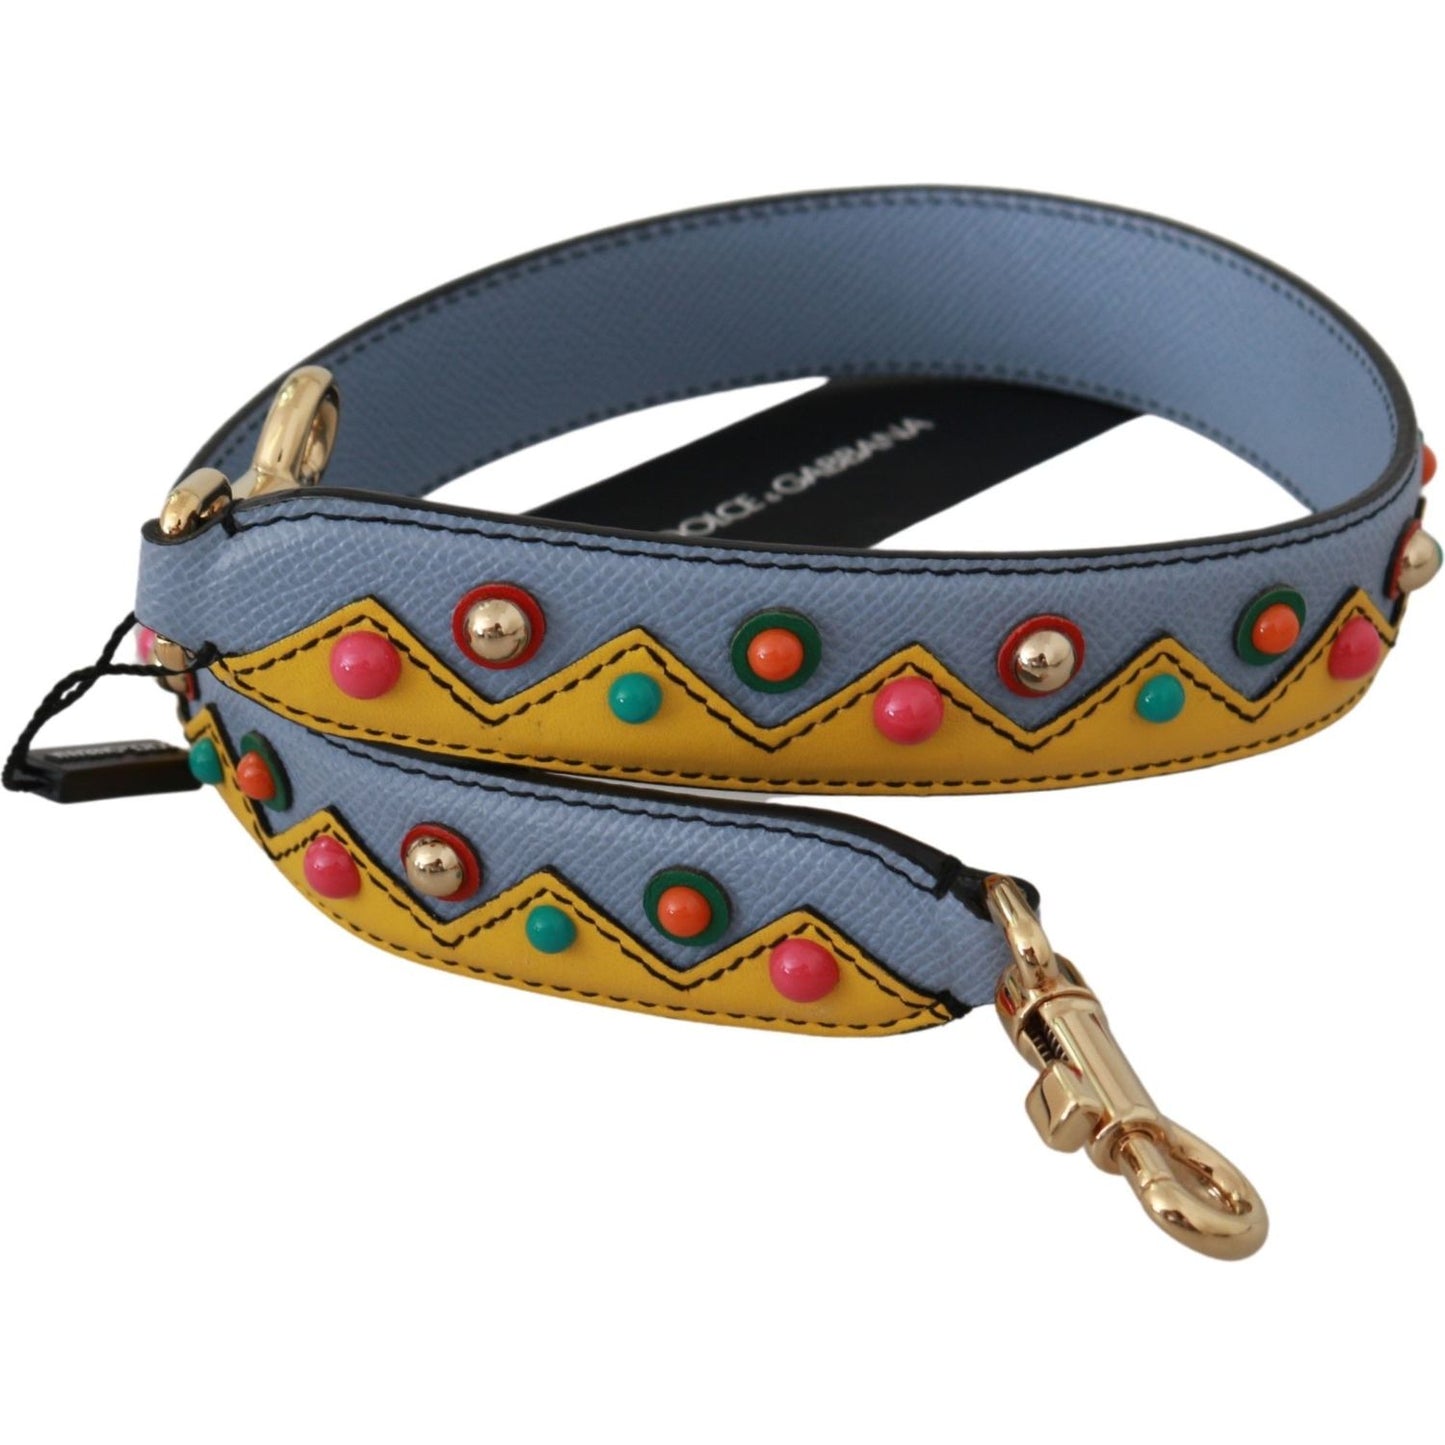 Dolce & Gabbana Multicolor Leather Shoulder Strap Accessory blue-handbag-accessory-shoulder-strap-leather